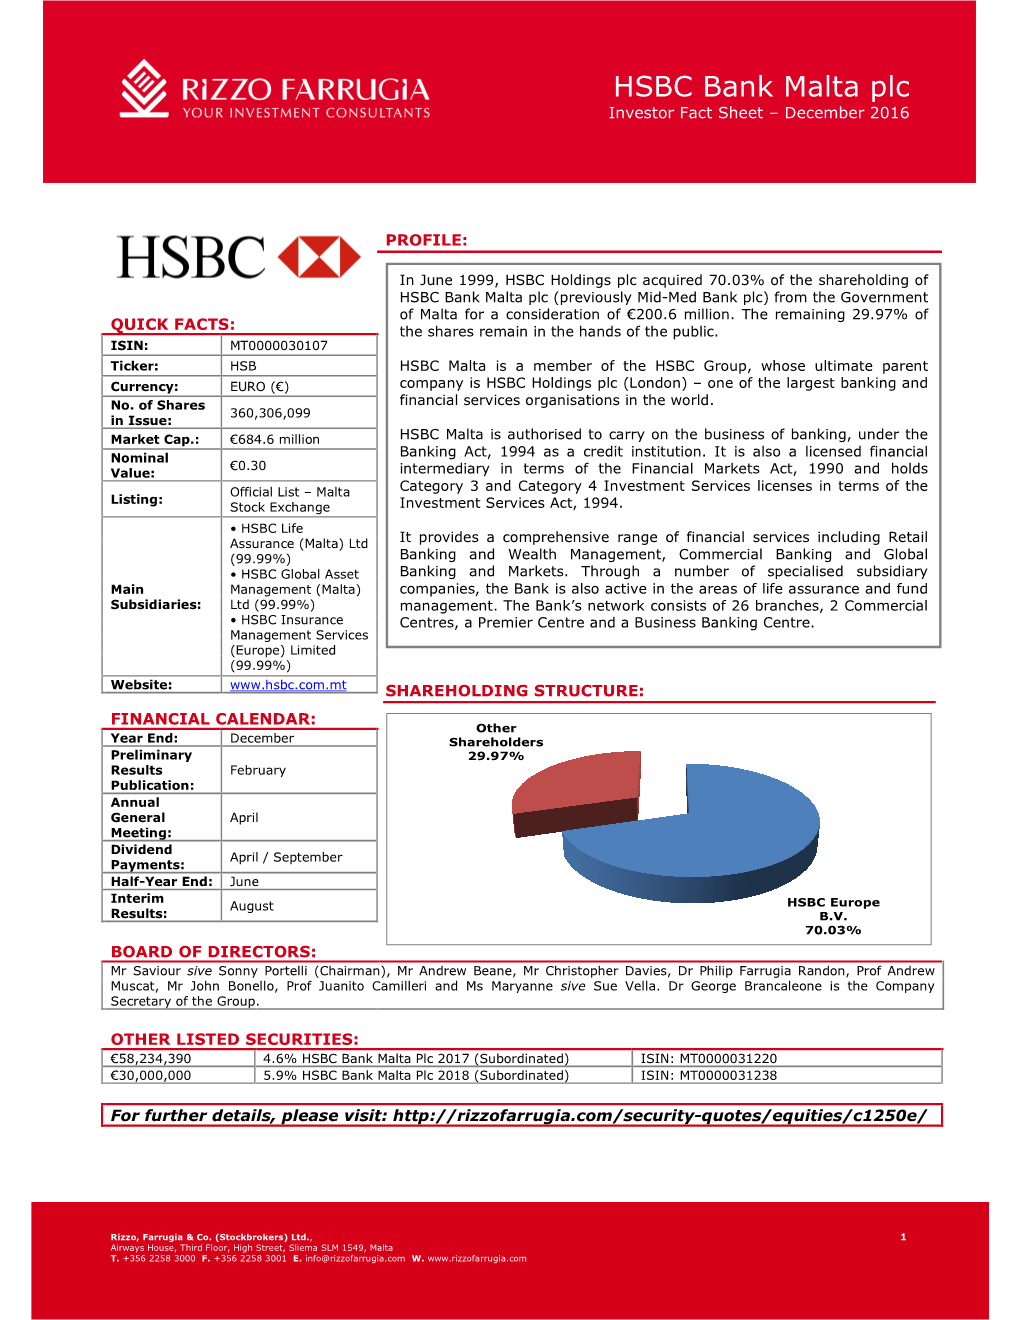 HSBC Bank Malta Plc Investor Fact Sheet – December 2016